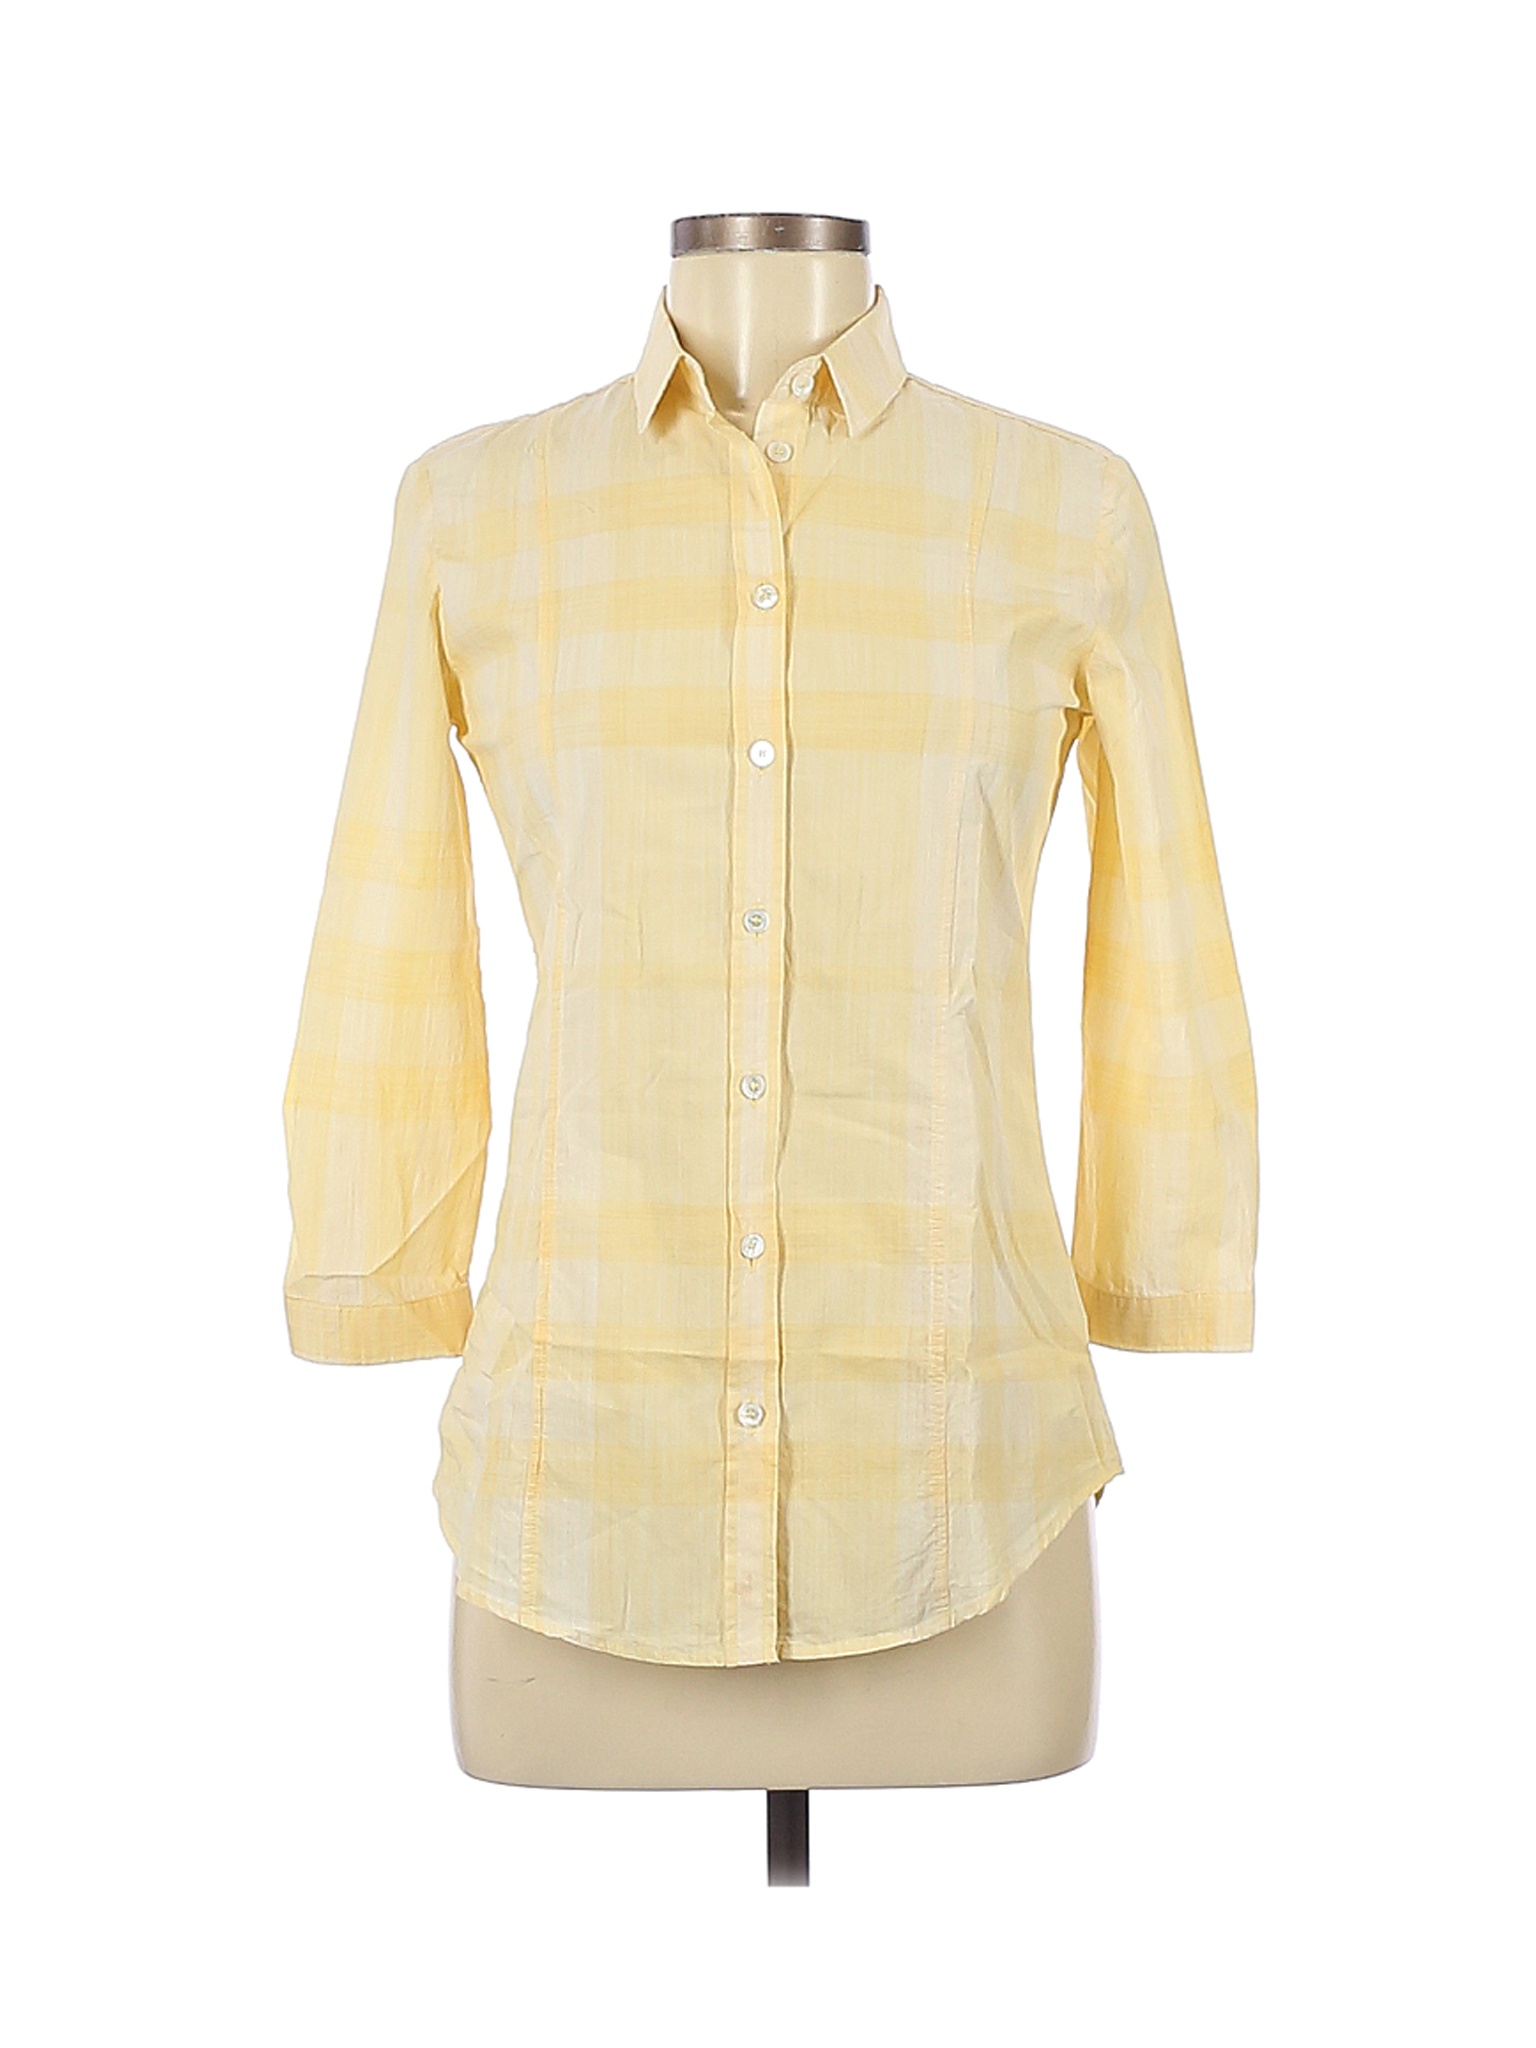 Burberry Brit Women Yellow 3/4 Sleeve Button-Down Shirt XS | eBay